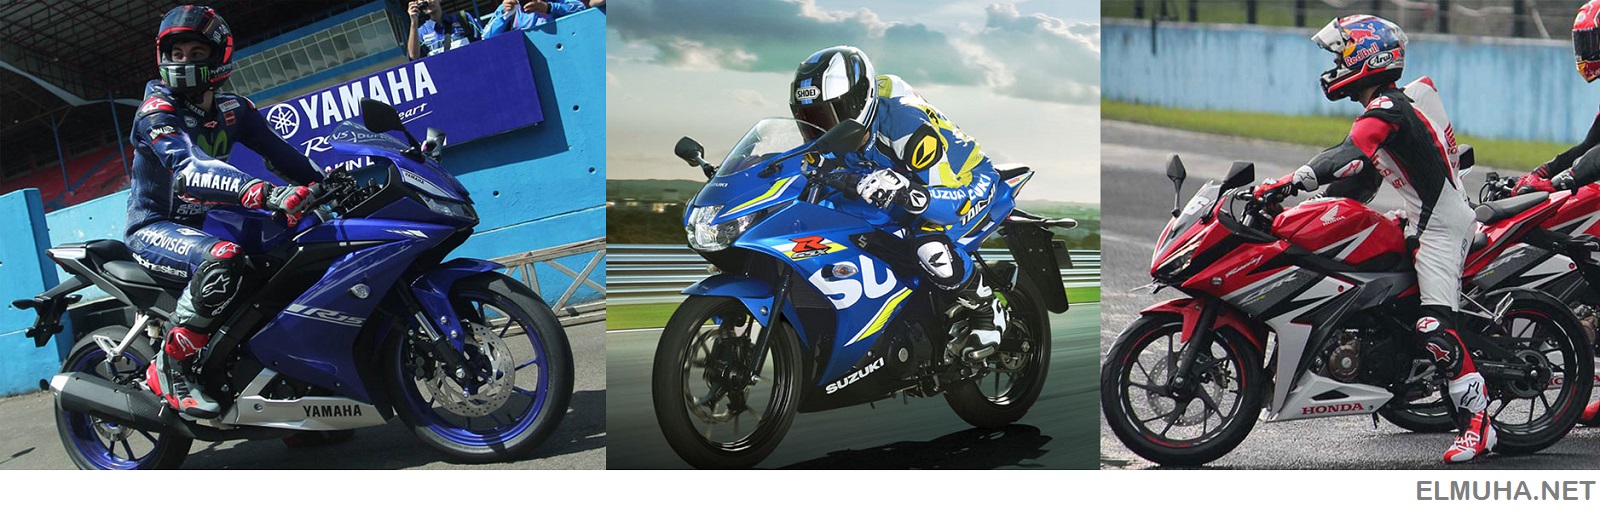 Suzuki GSX-R150 vs Honda CBR150R vs Yamaha R15 2017